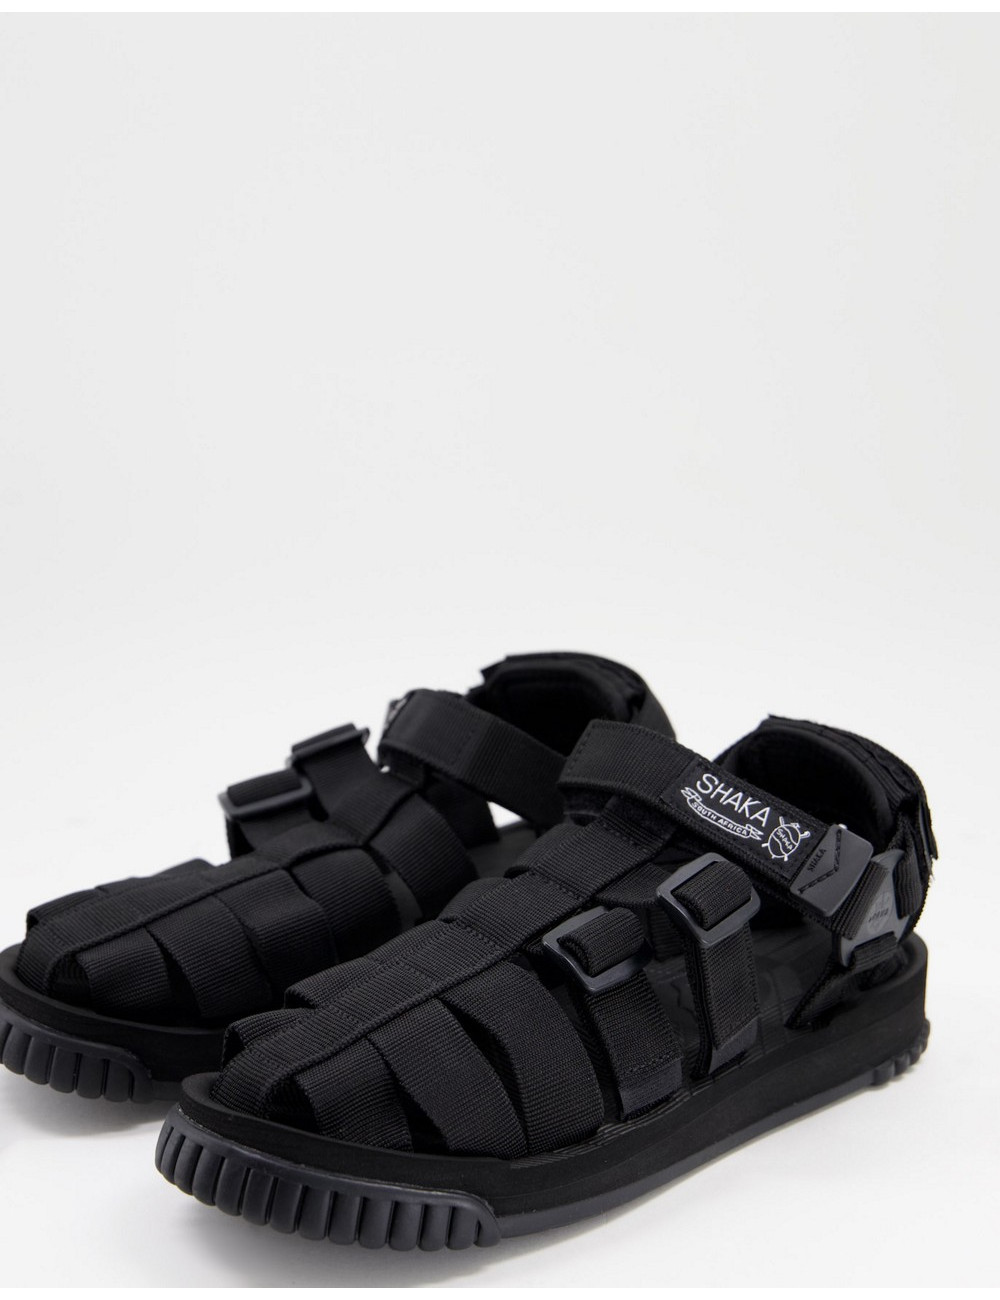 Shaka hiker sandals in black